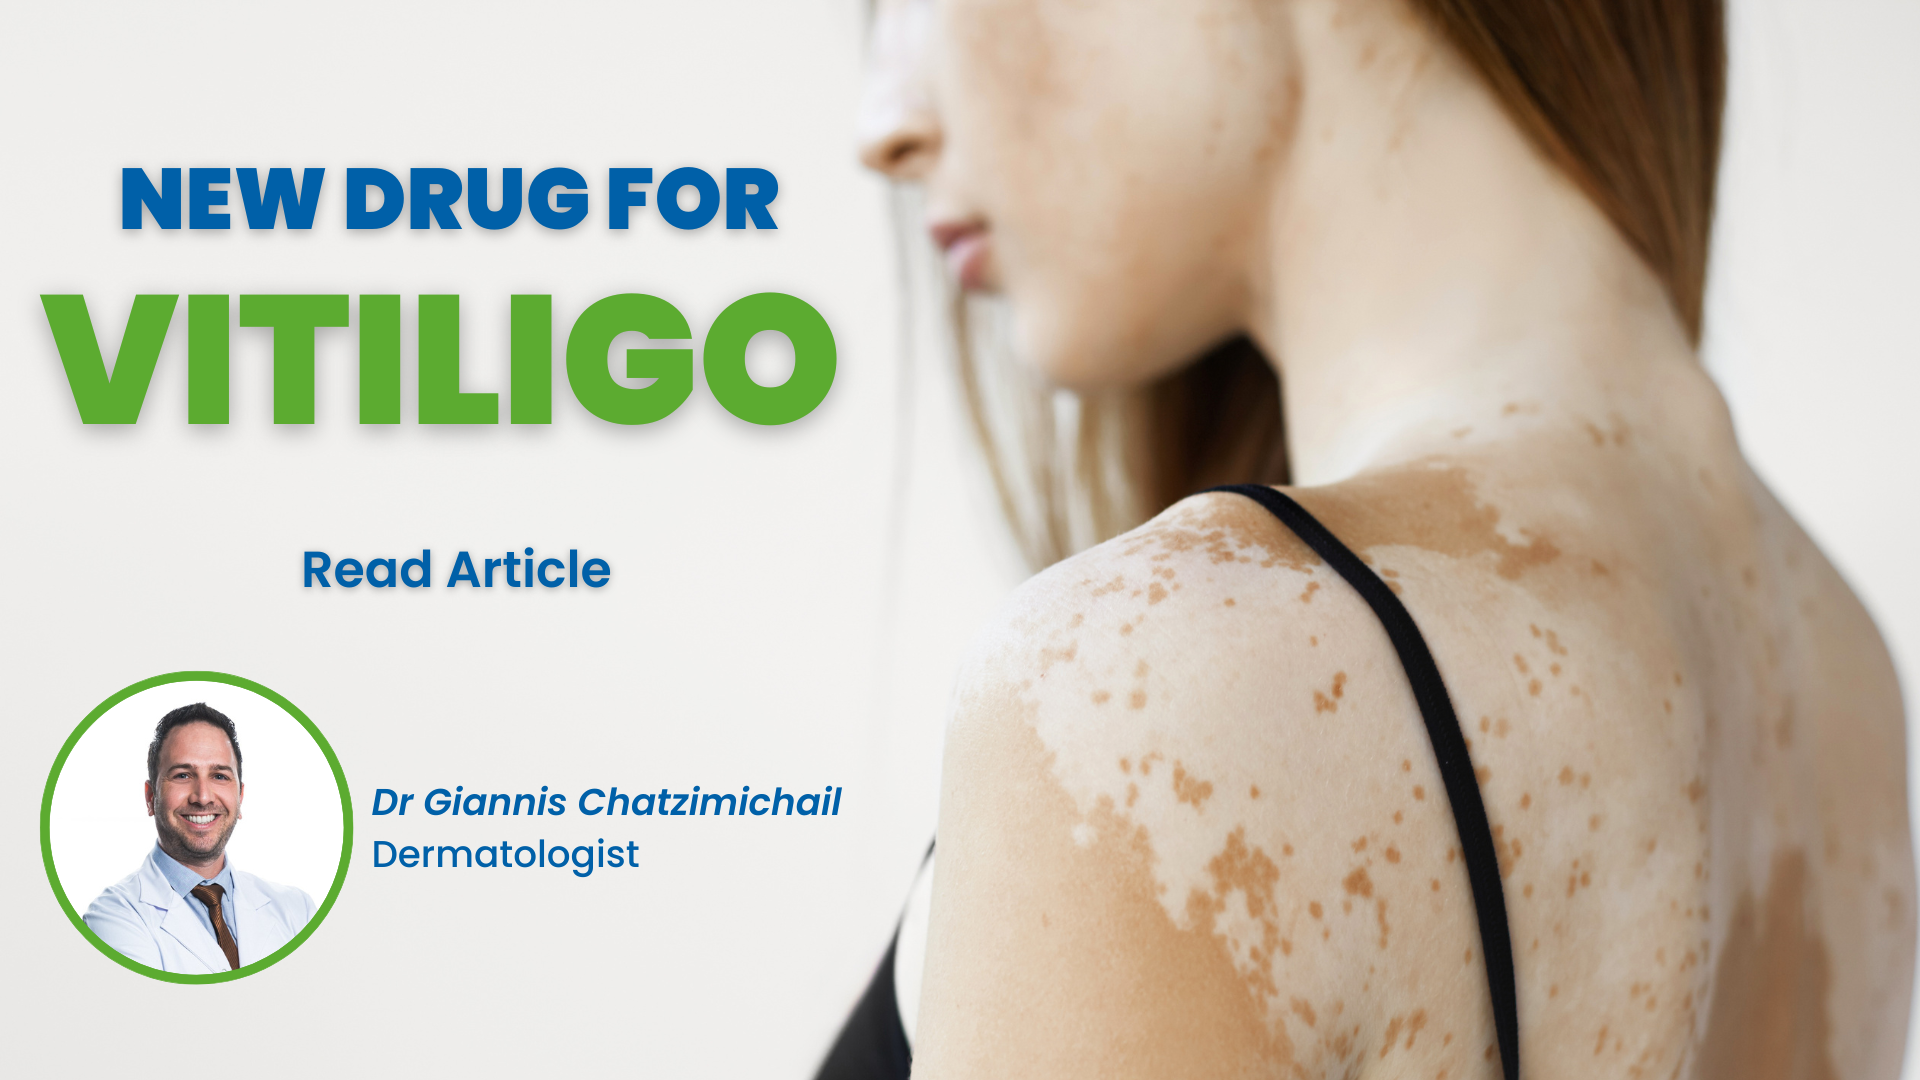 Effective treatment for Vitiligo?